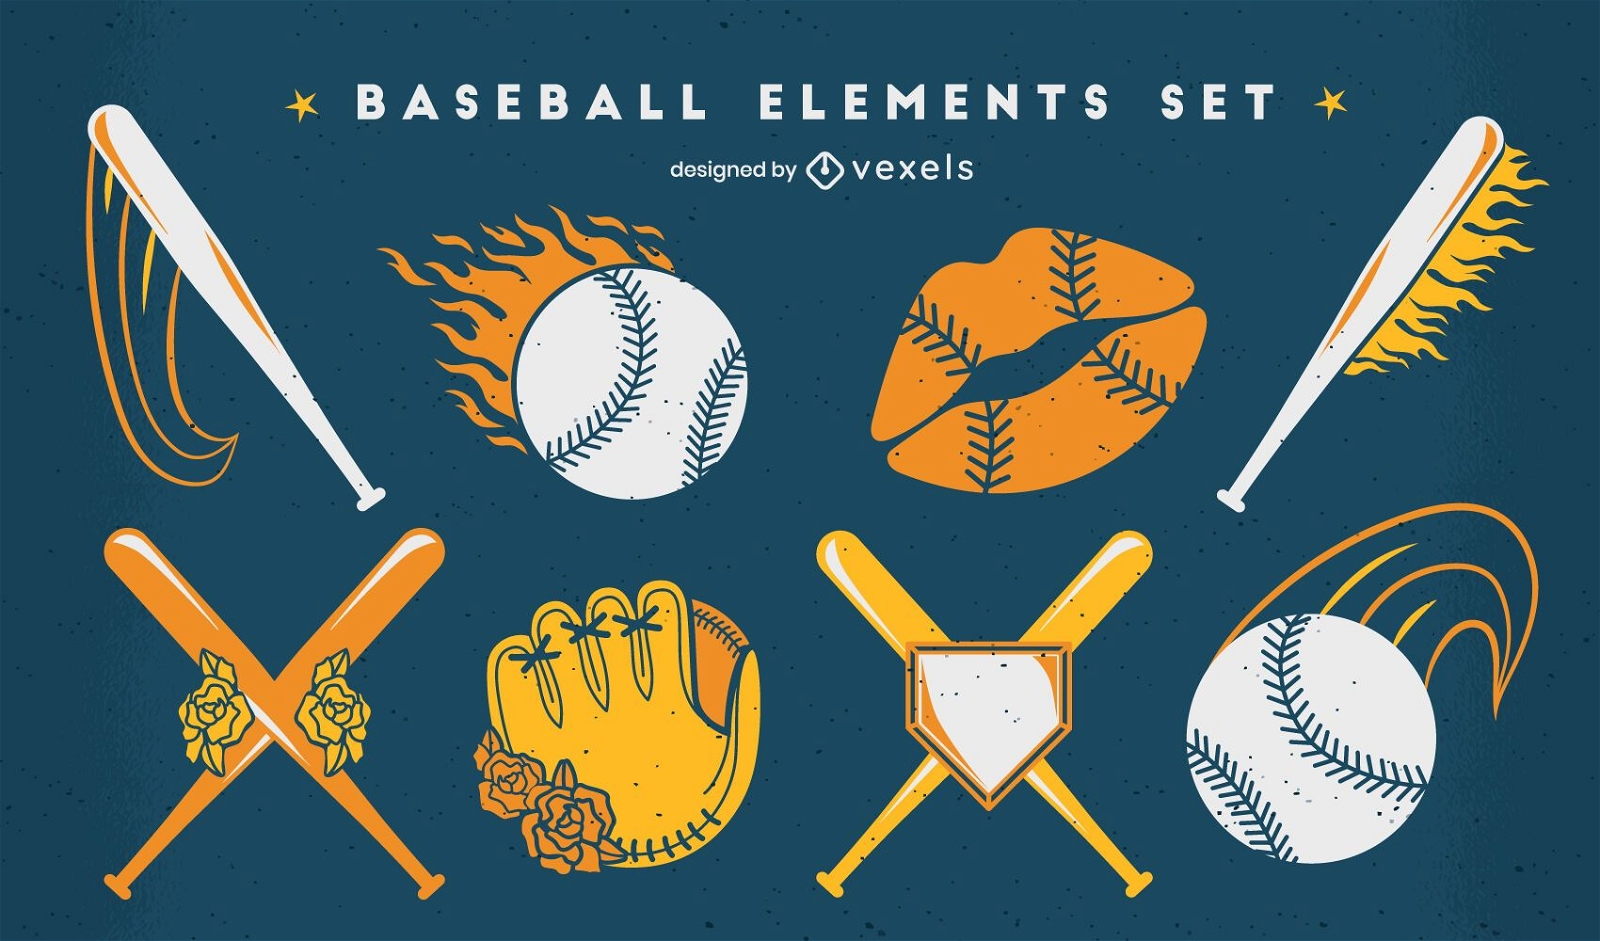 Vintage baseball elements set